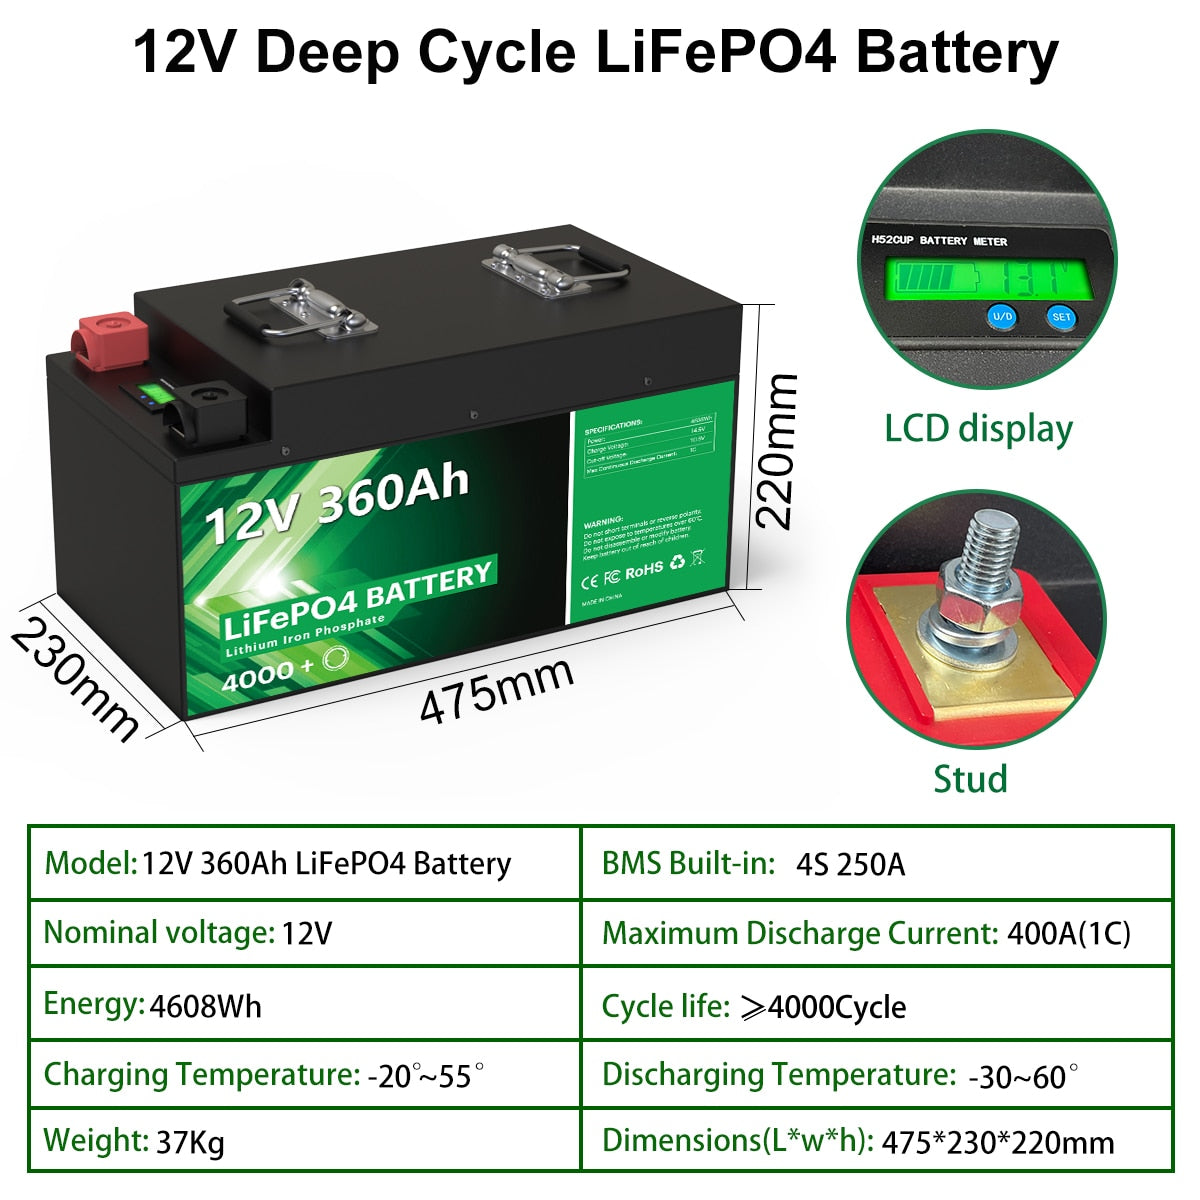 12V Deep Cycle LiFePO4 Battery HsZC